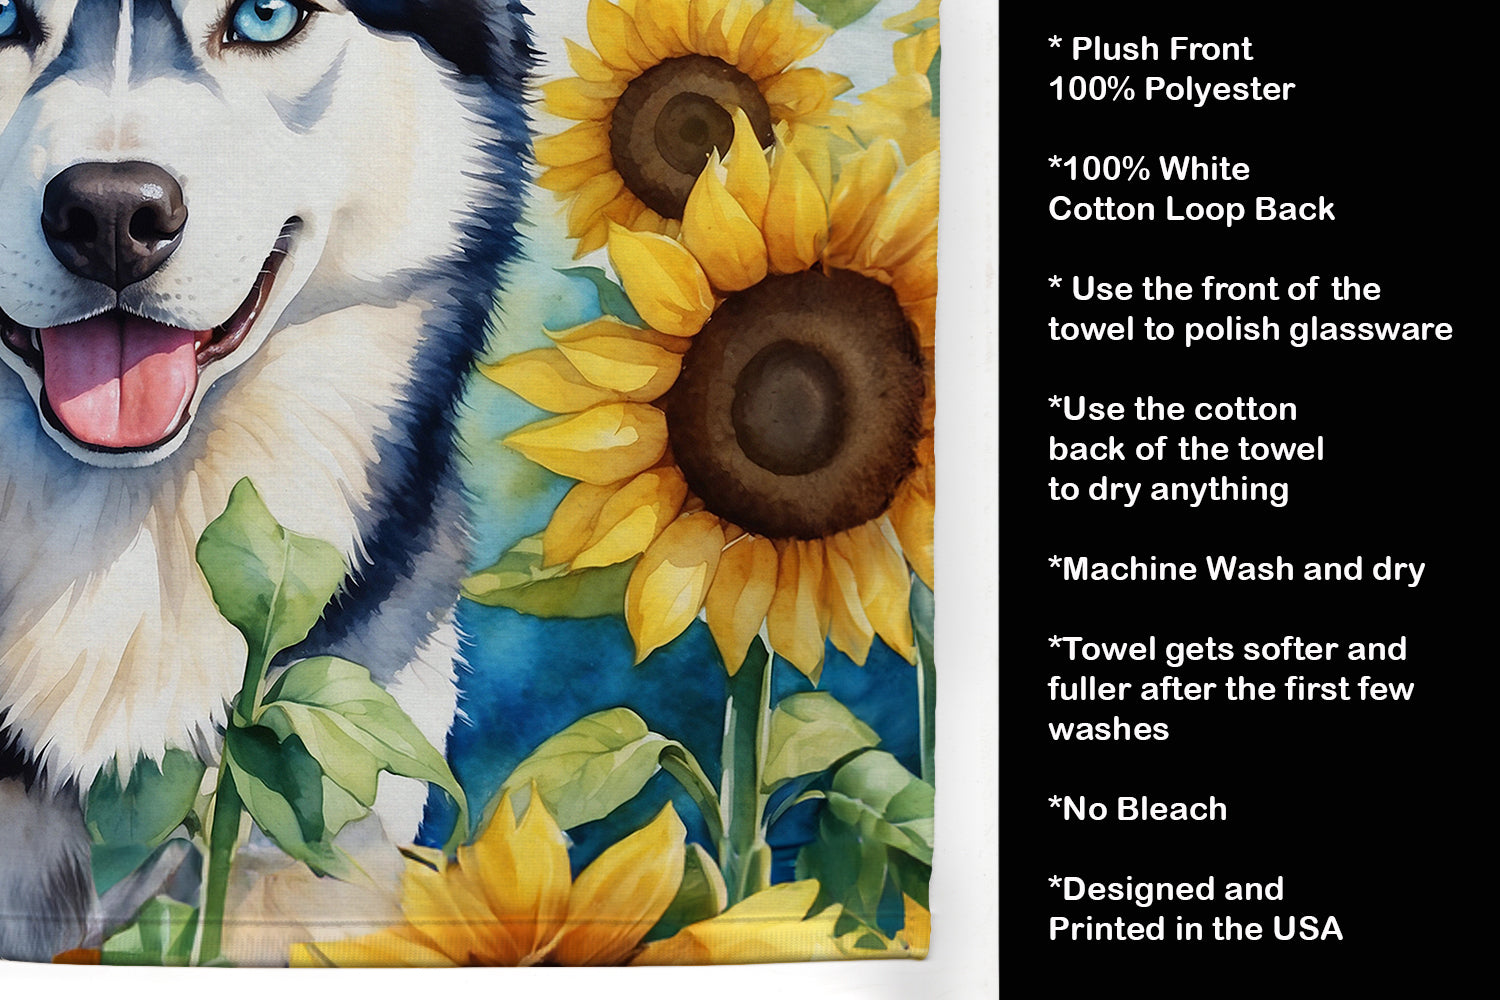 Siberian Husky in Sunflowers Kitchen Towel